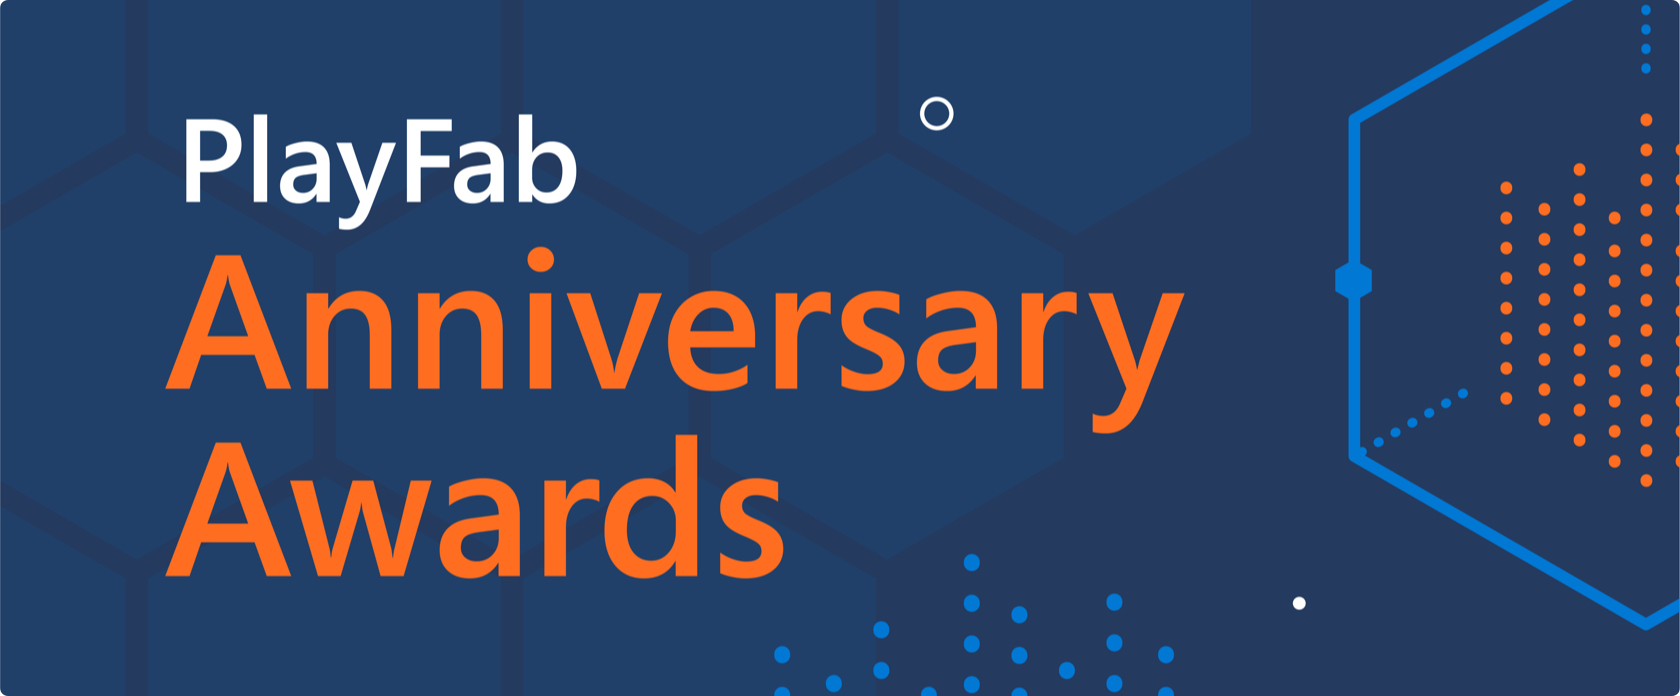 PlayFab anniversary awards banner